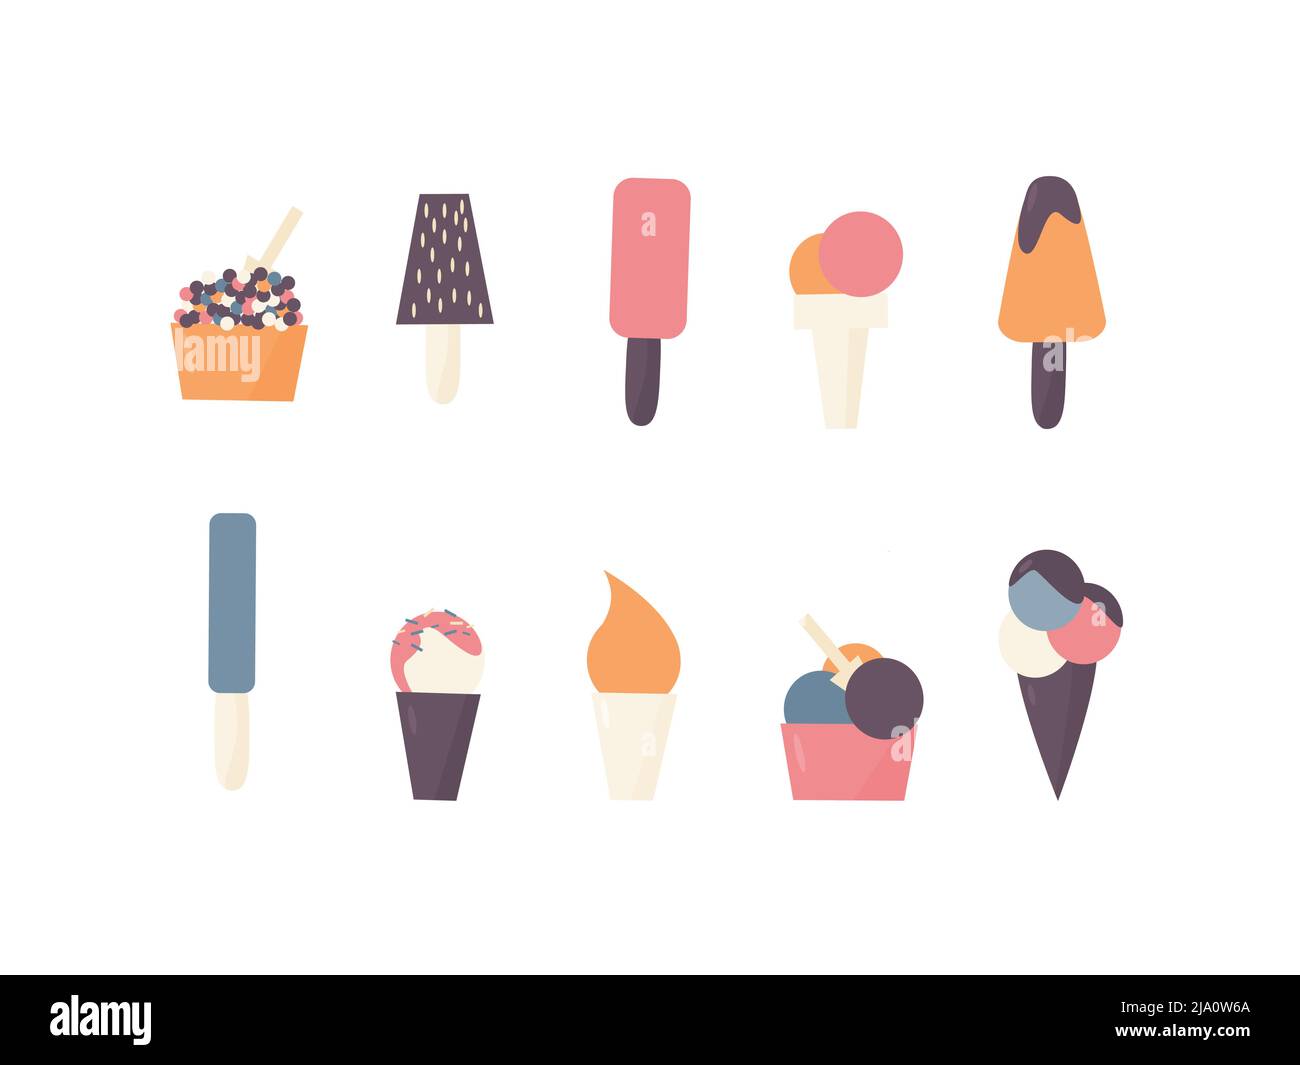 https://c8.alamy.com/comp/2JA0W6A/set-with-different-kinds-of-ice-cream-vector-illustration-flat-design-2JA0W6A.jpg